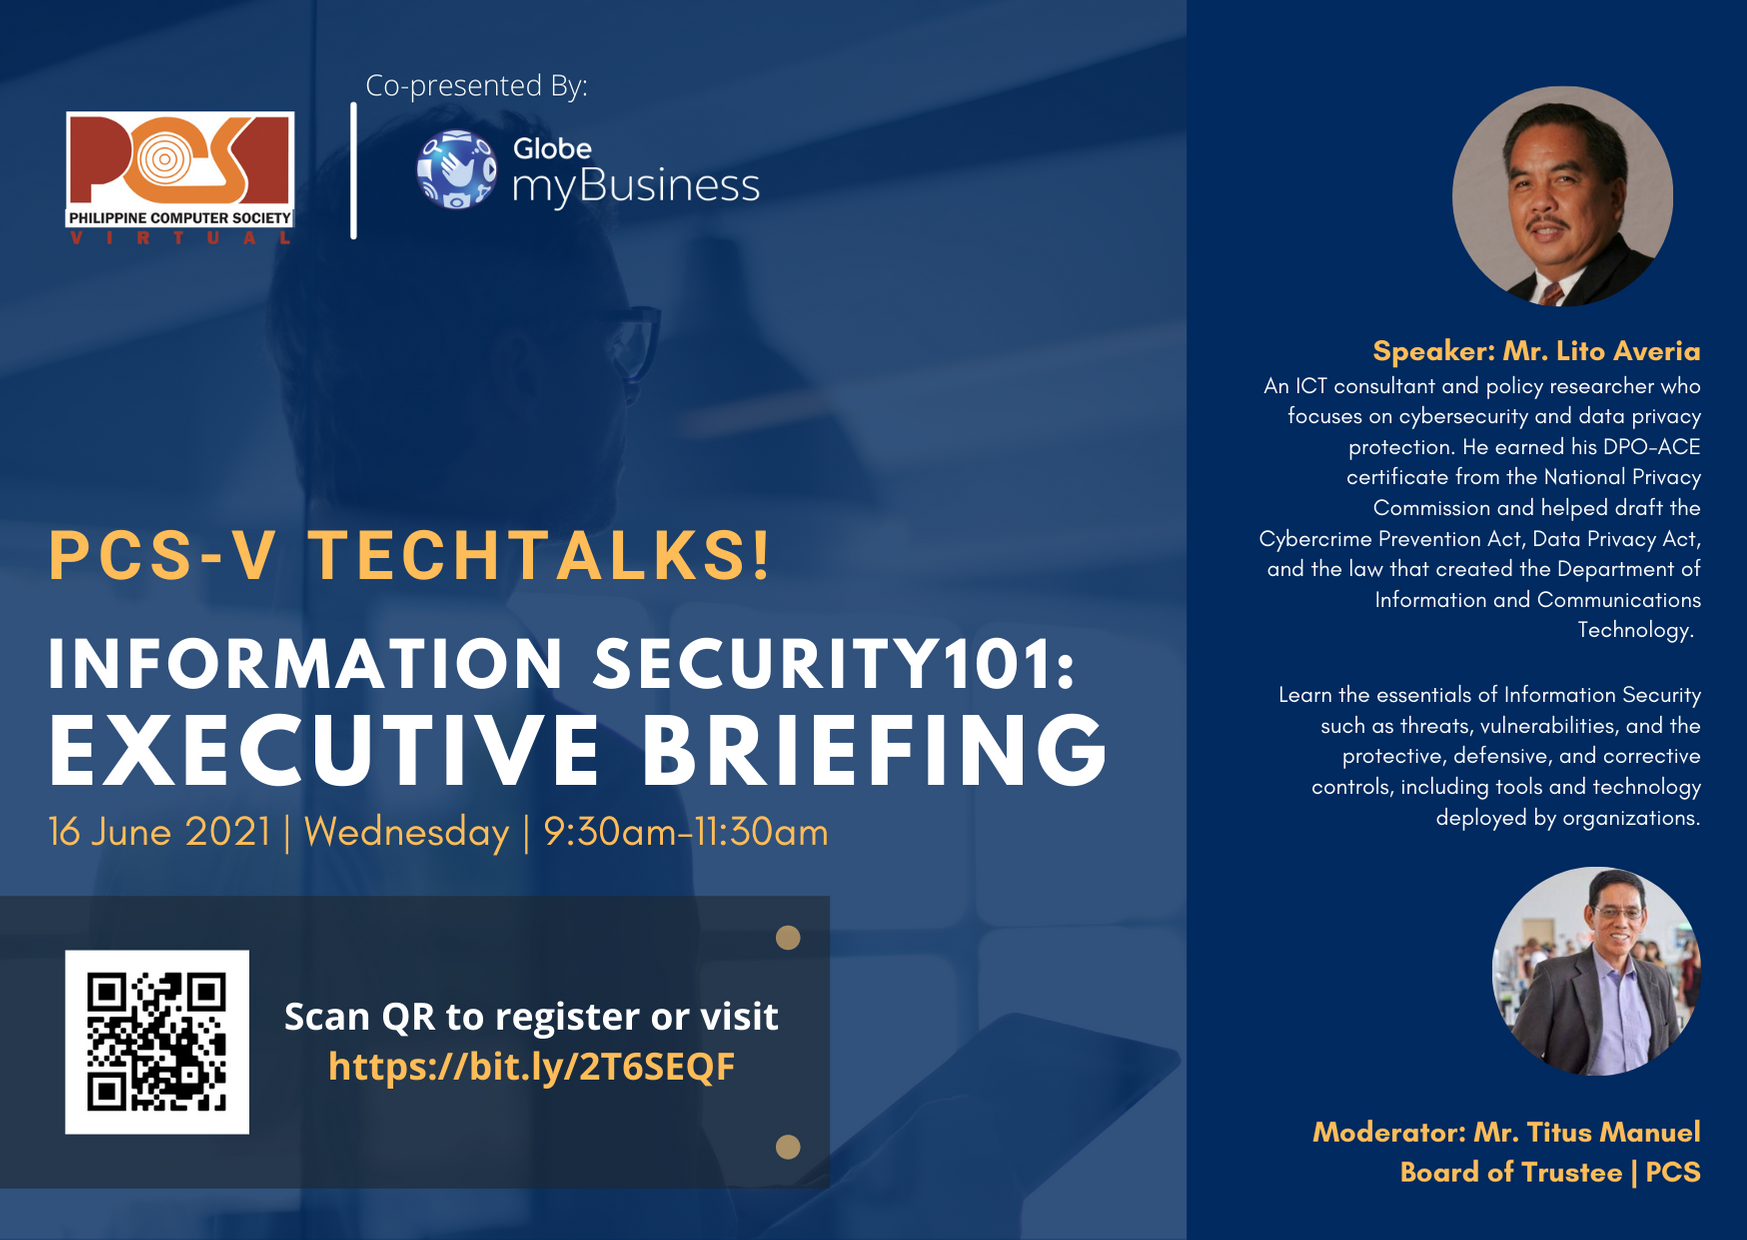 16 June 2021: Information Security 101: Executive Briefing